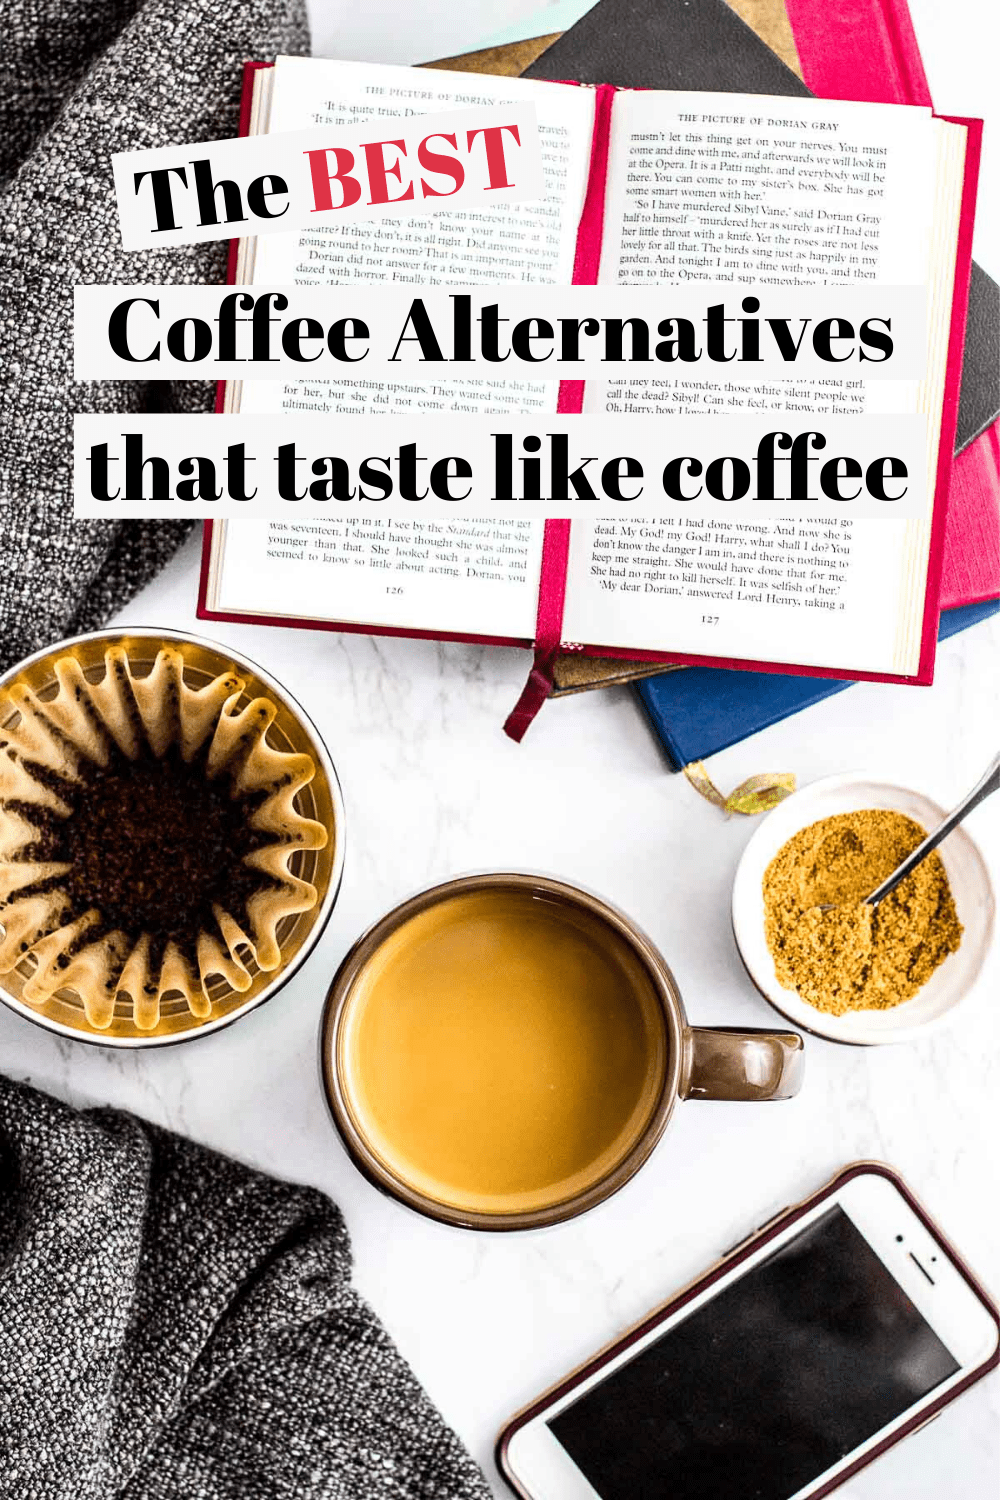 The Best Coffee Alternatives that tastes like coffee!